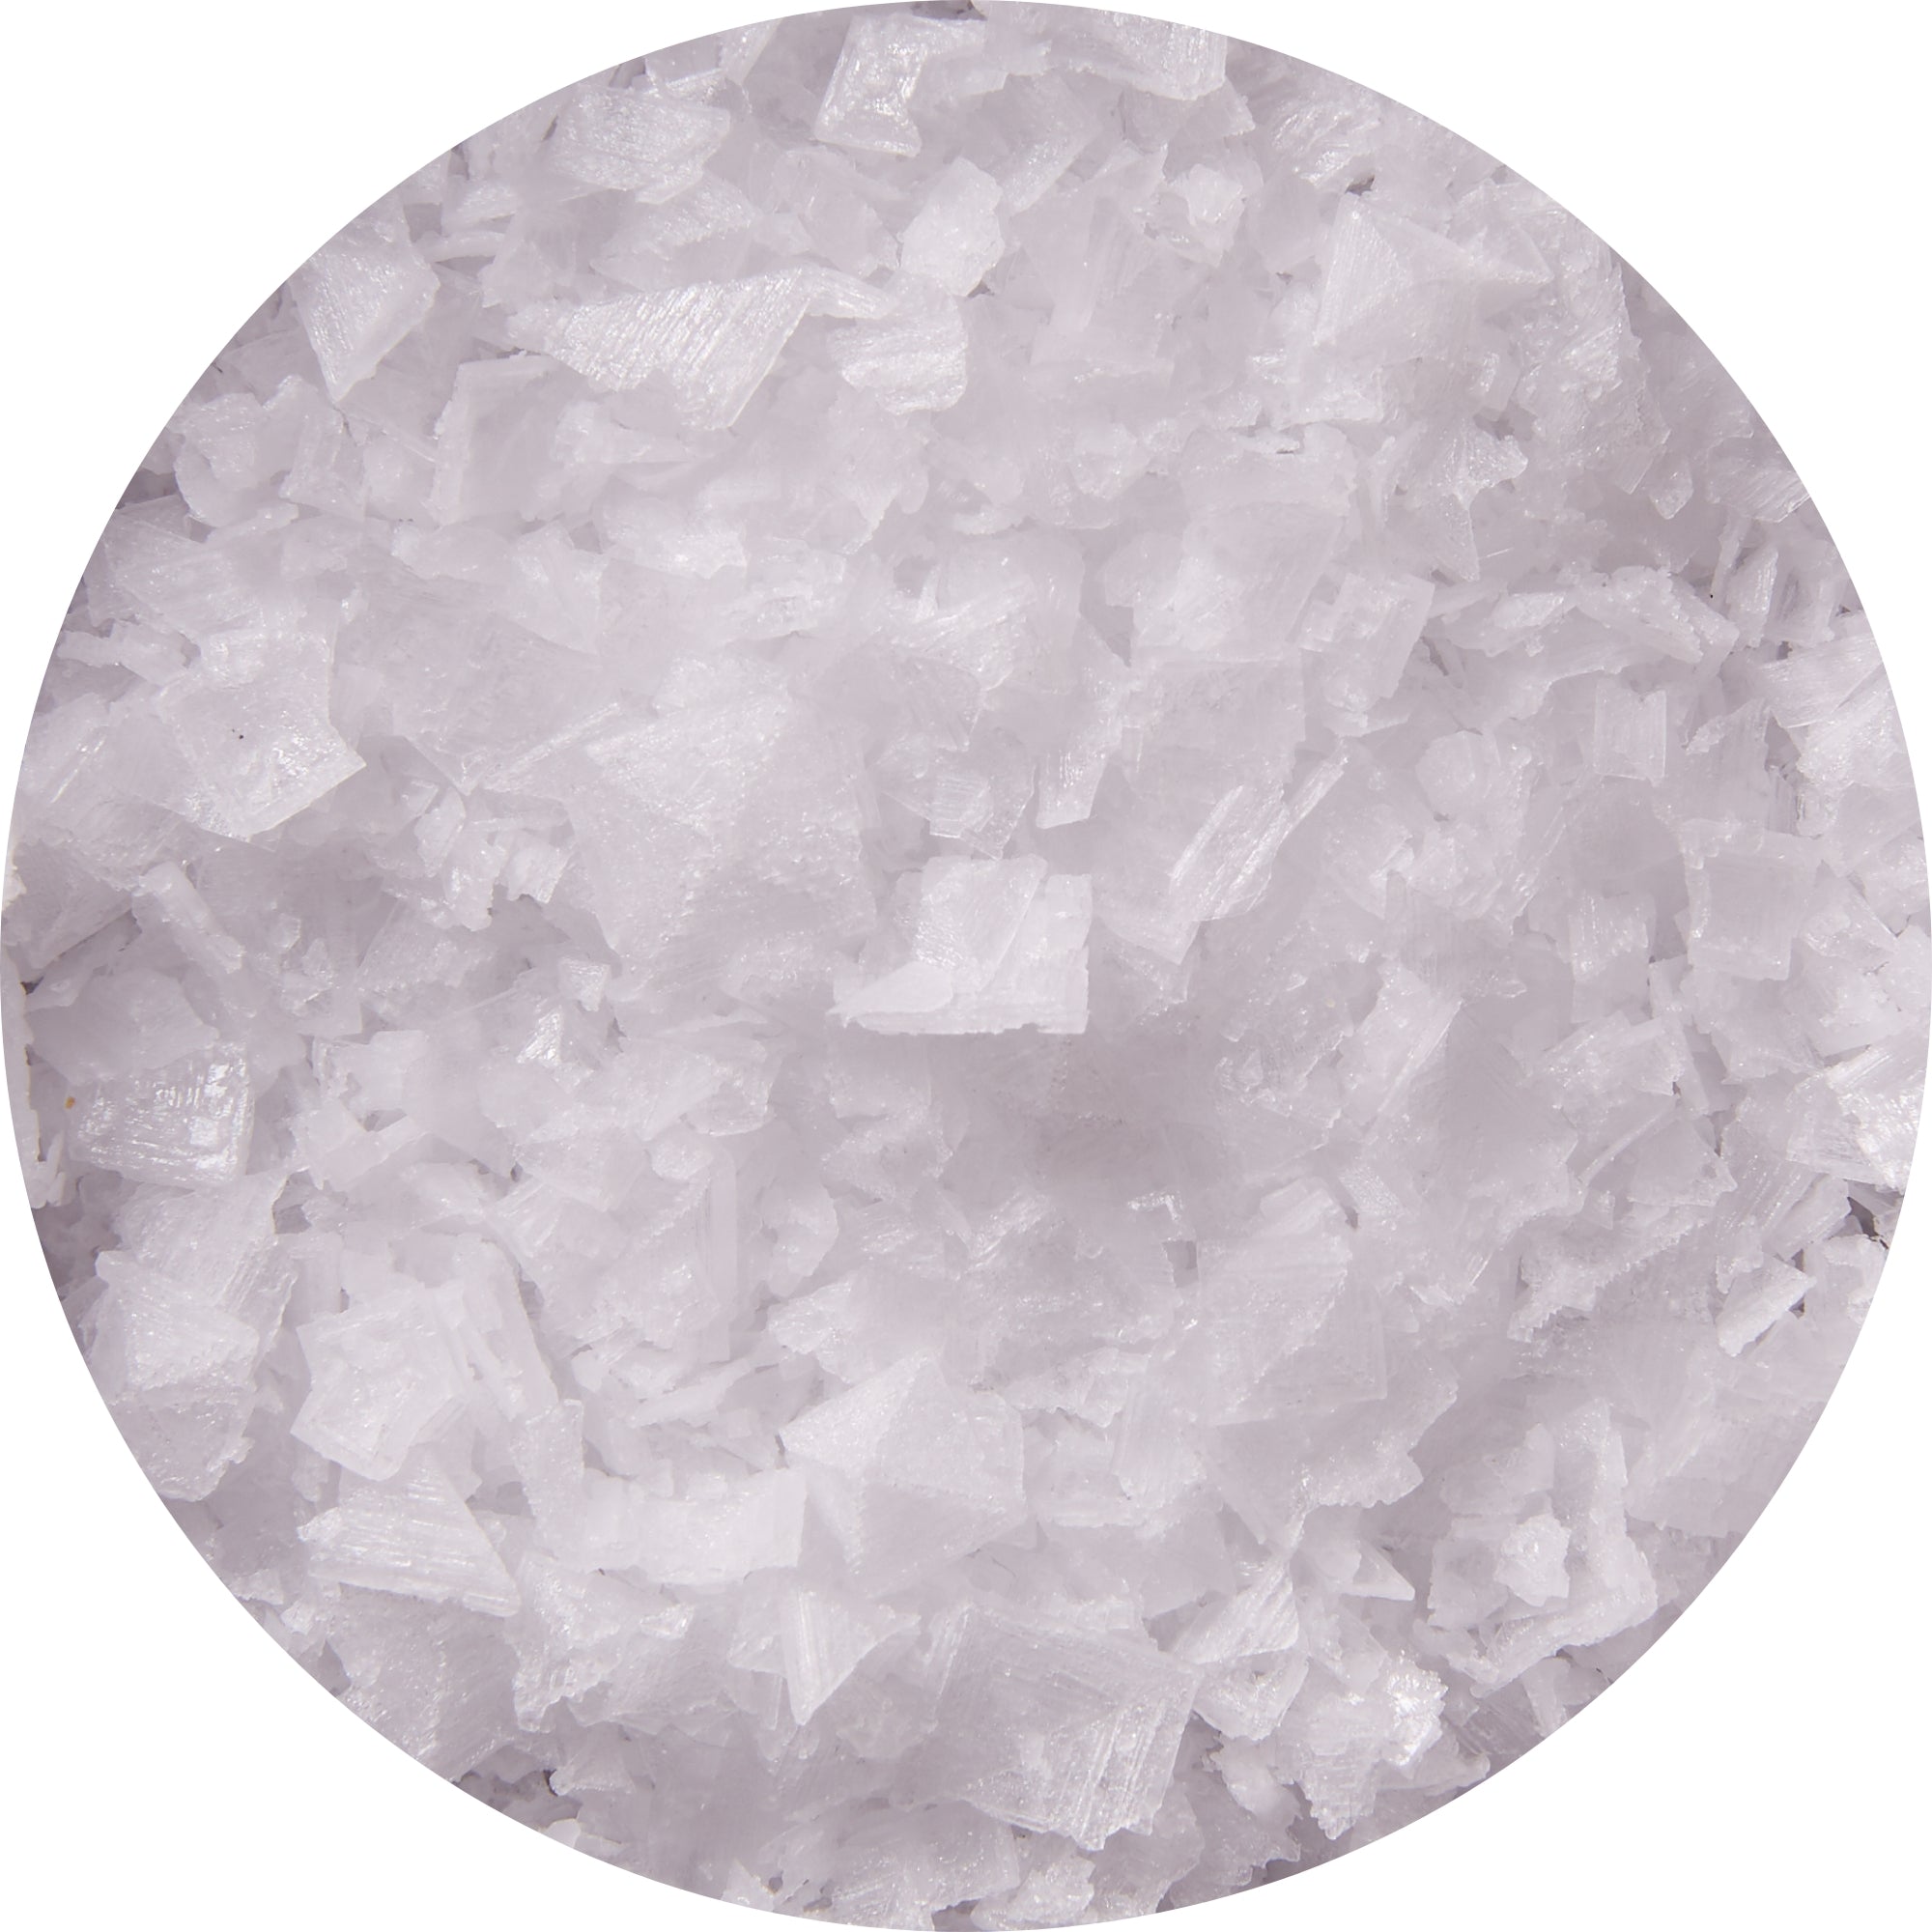 Exfo-Lite Sea Salt Ingredient